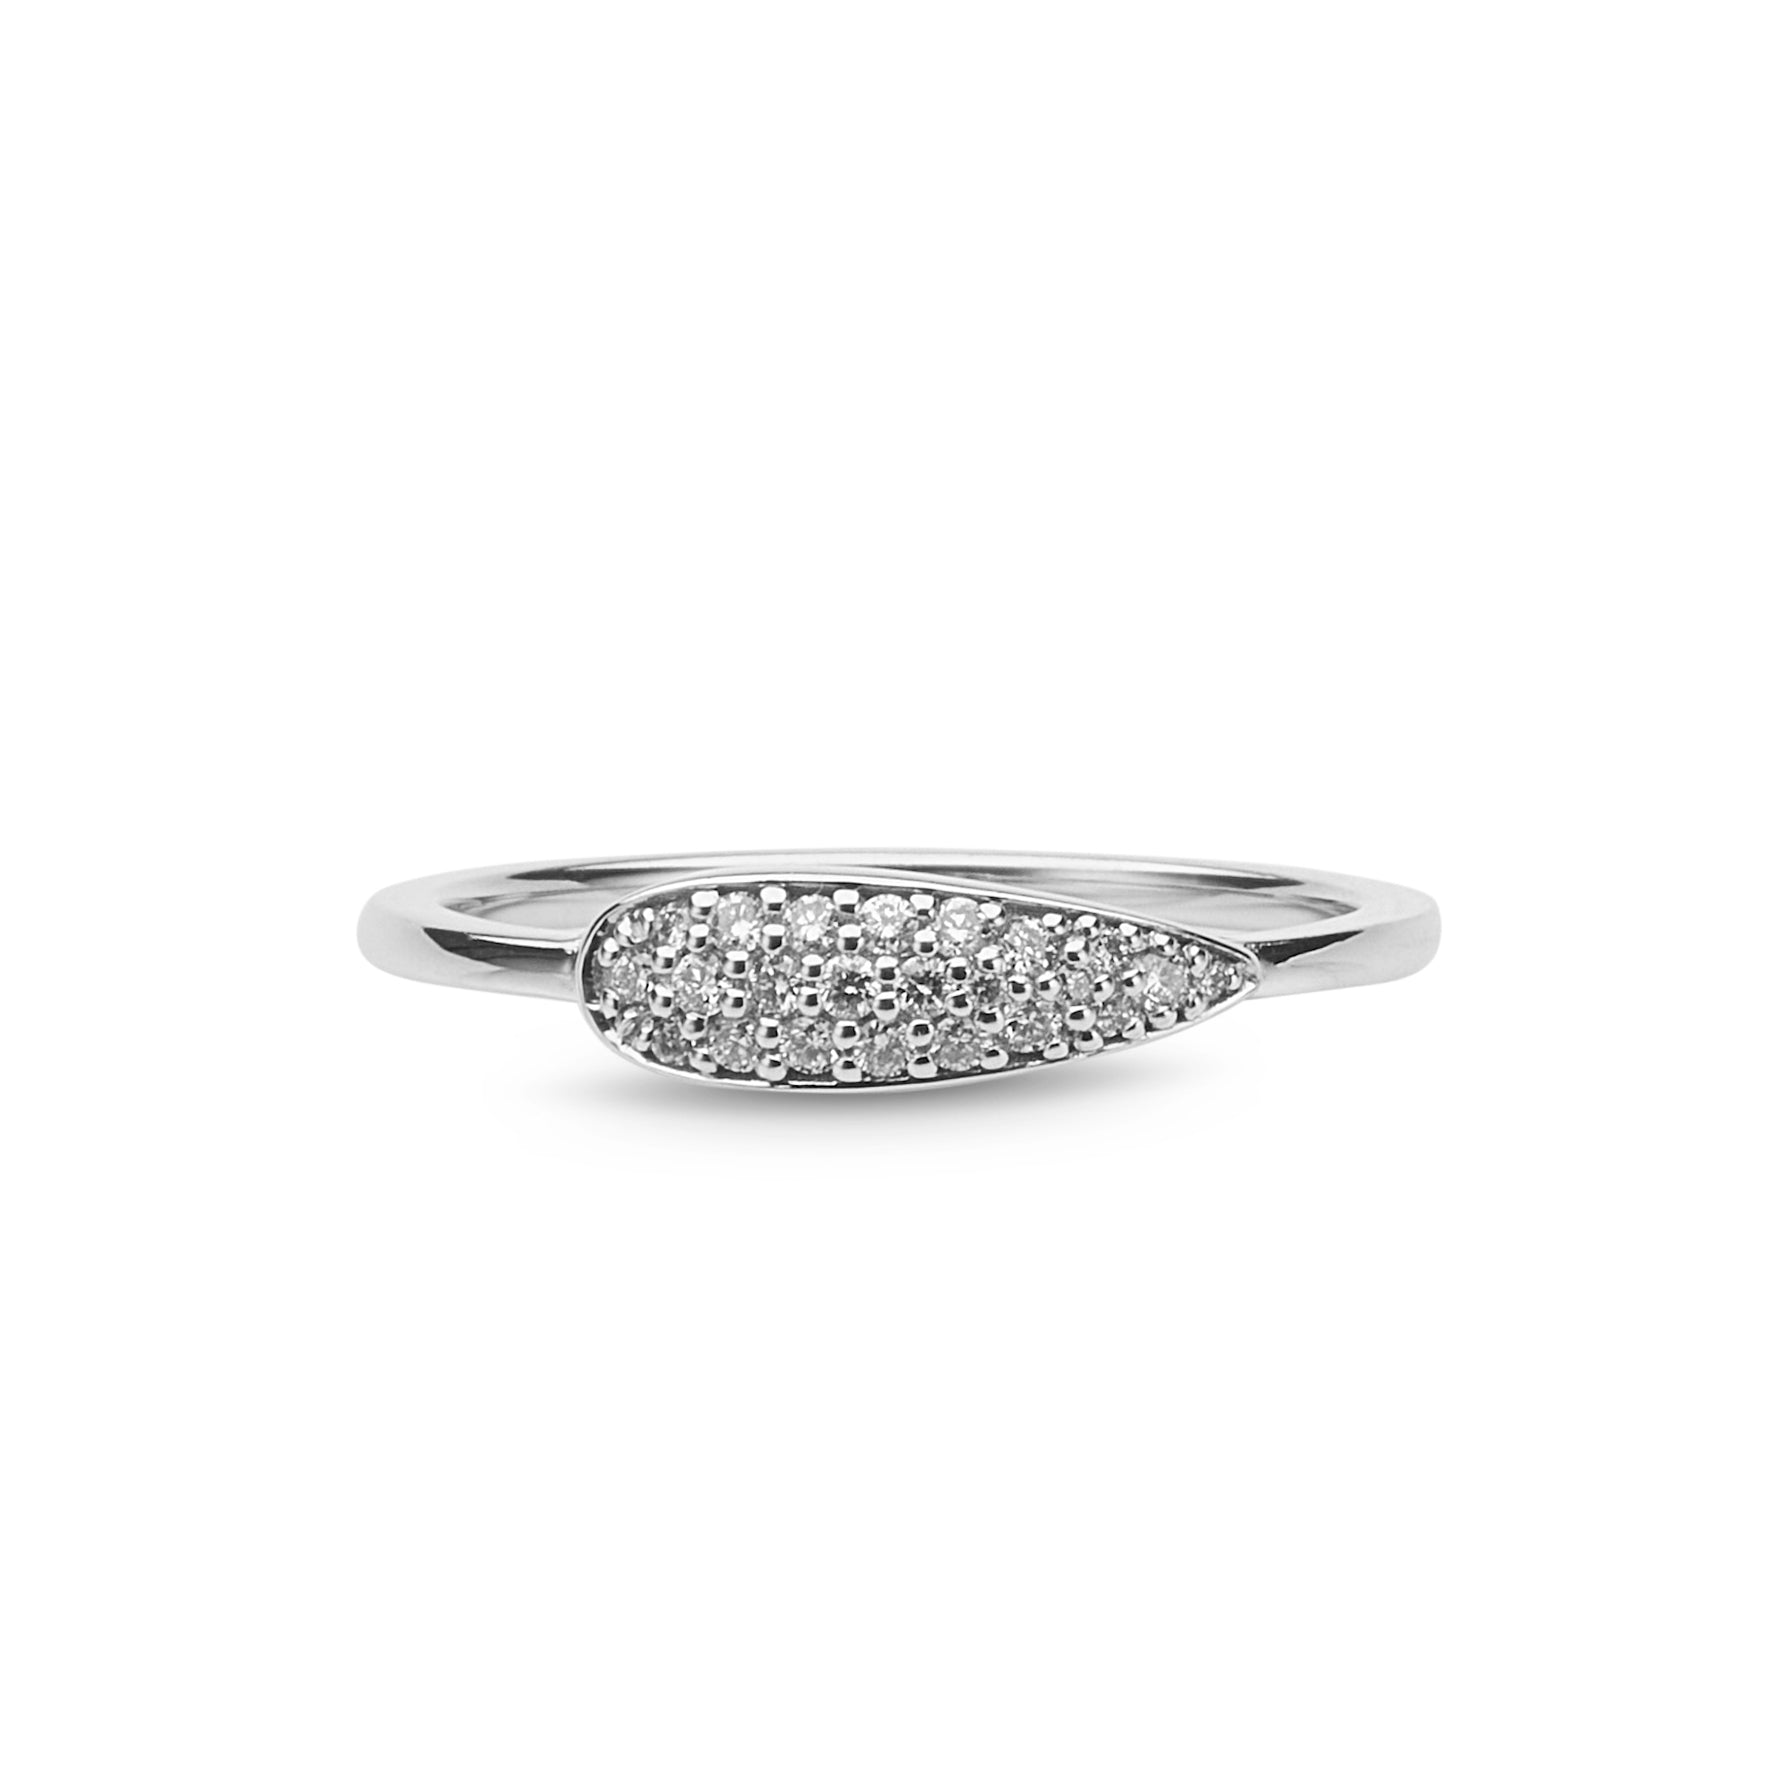 Leaf Shaped Diamond Ring